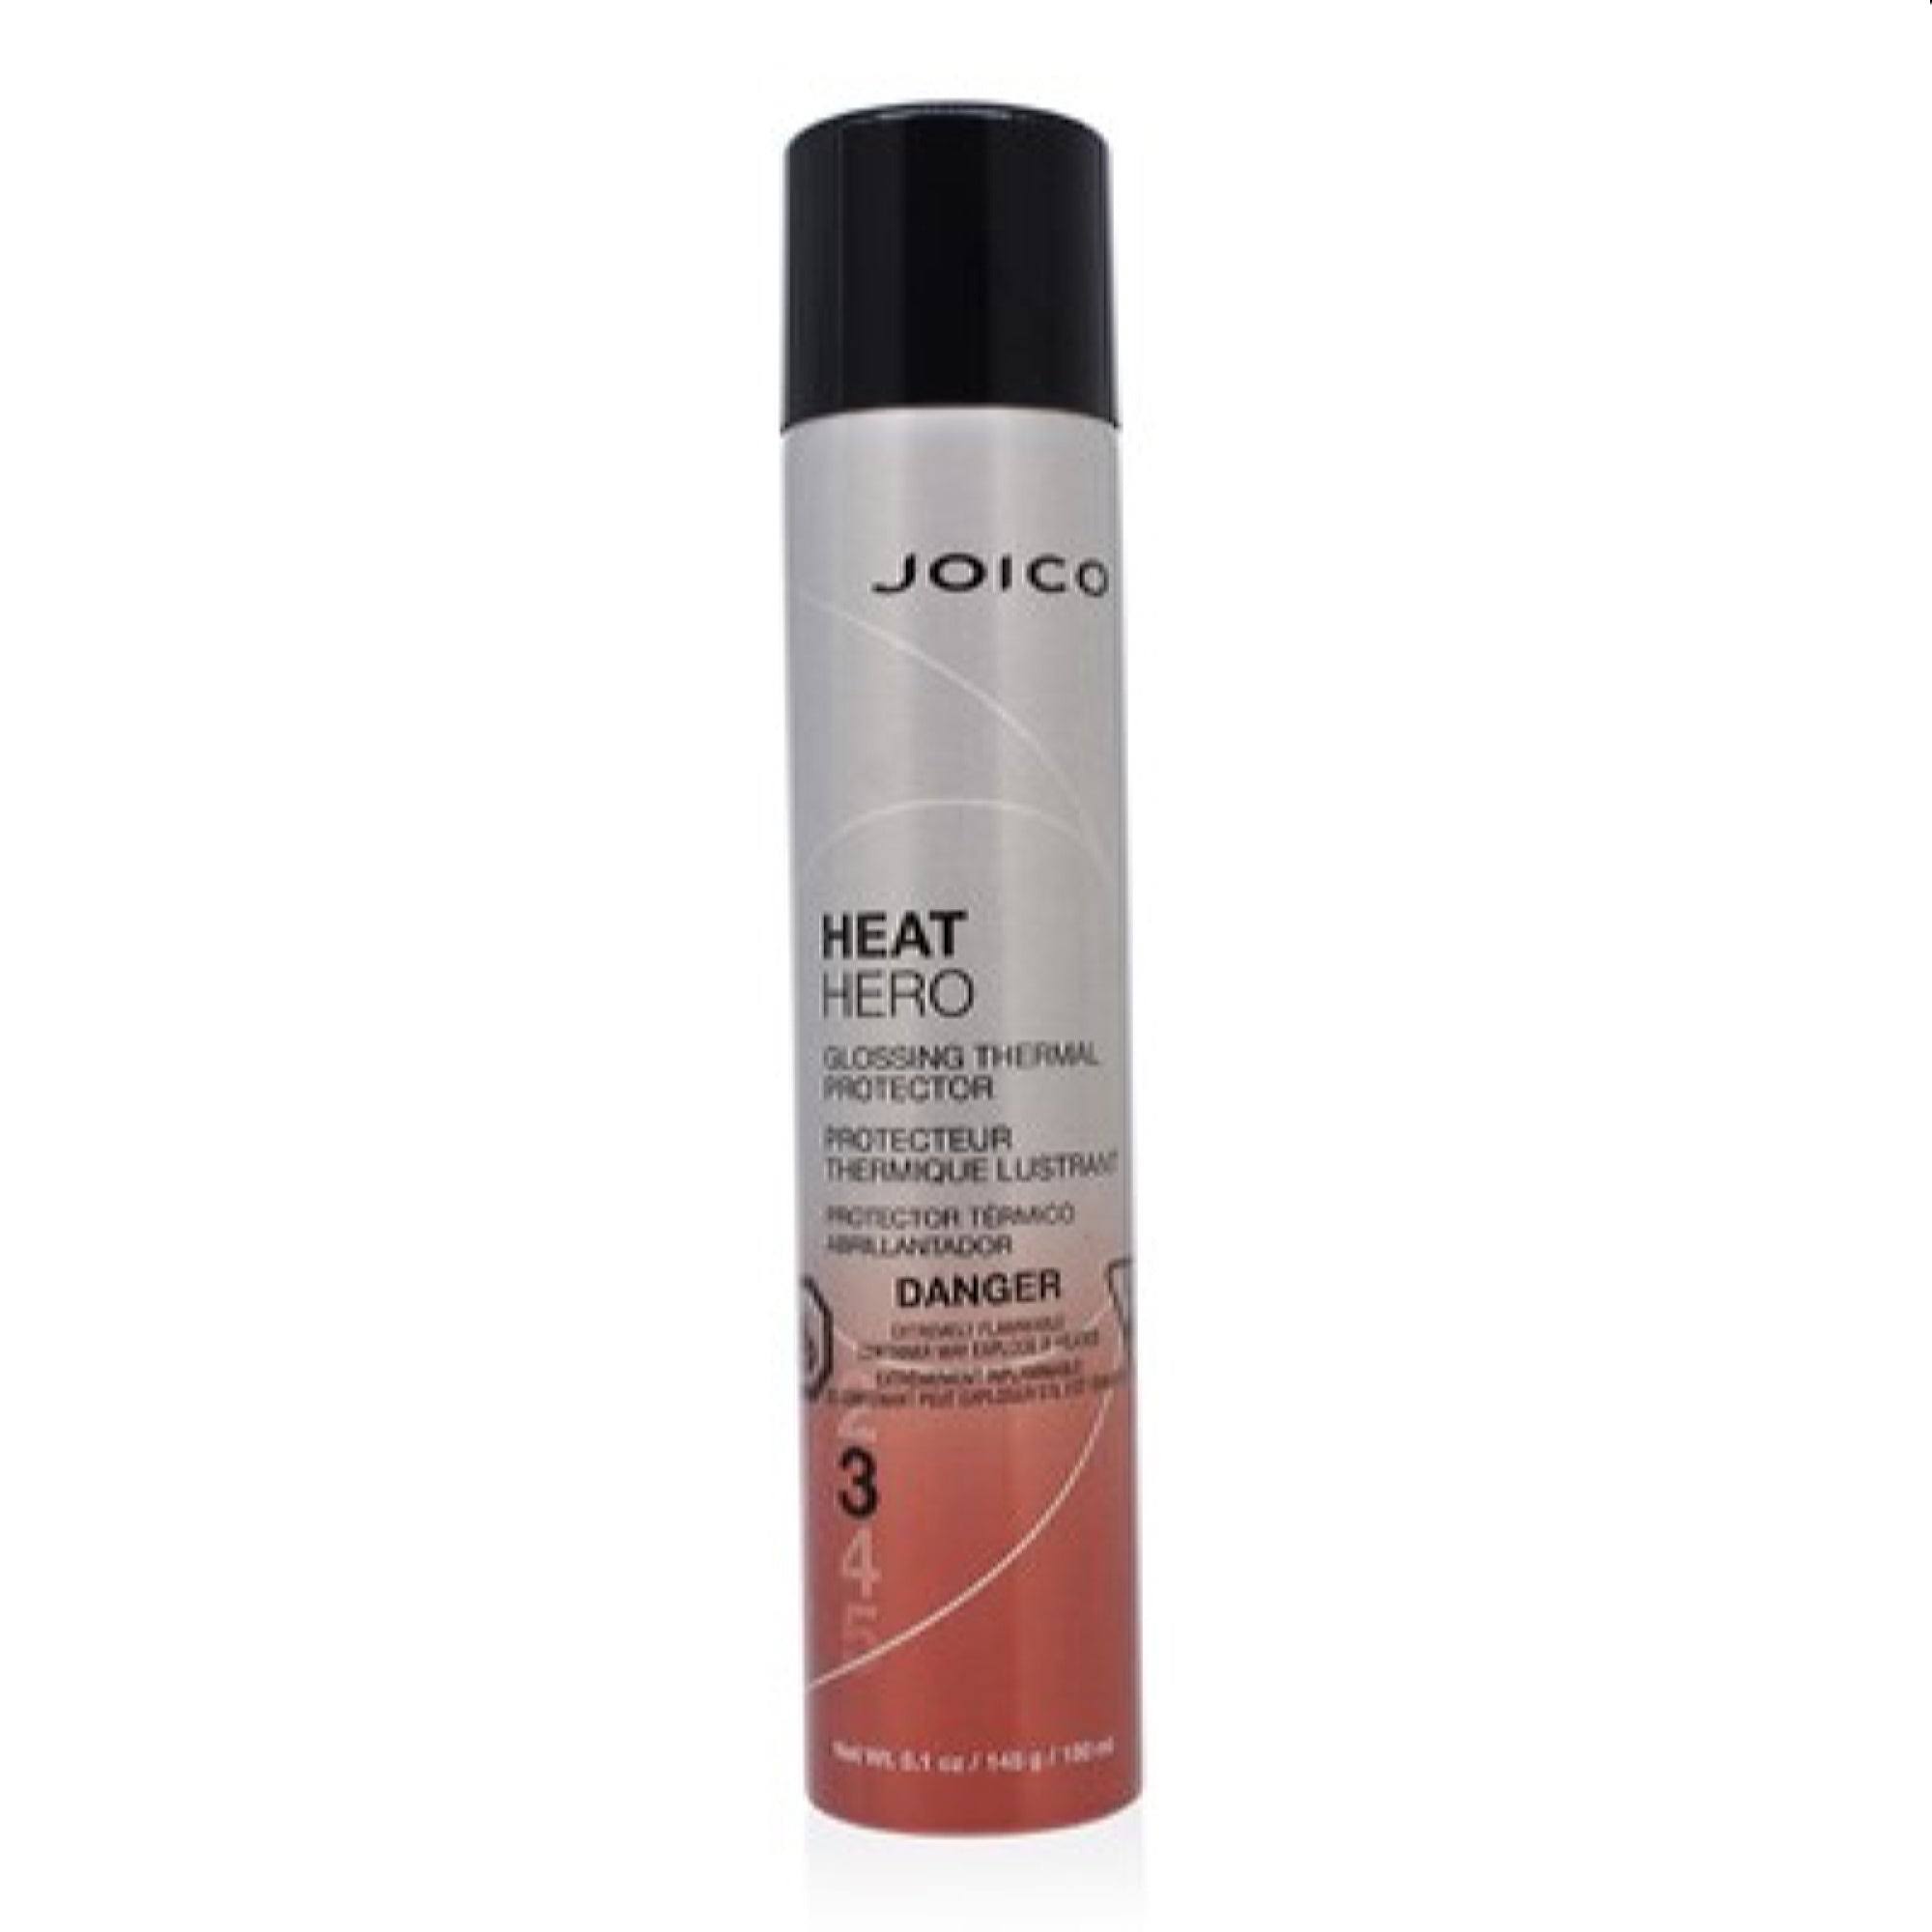 Joico Heat Hero Glossing Thermal Protector - 5.1 oz